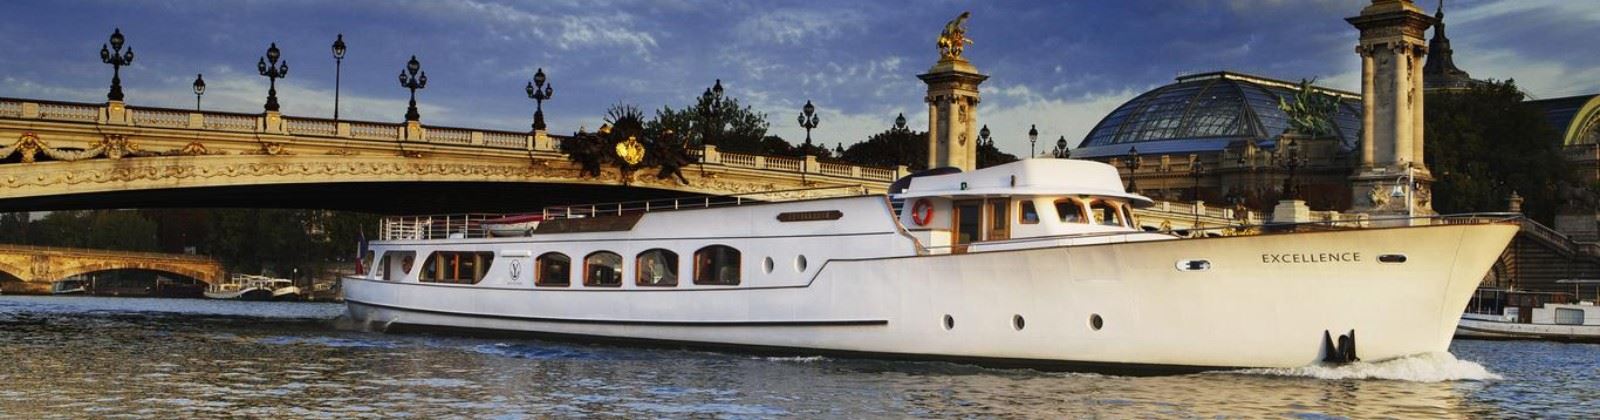 OLEVENE Image - yachts-paris-olevene-reunion-